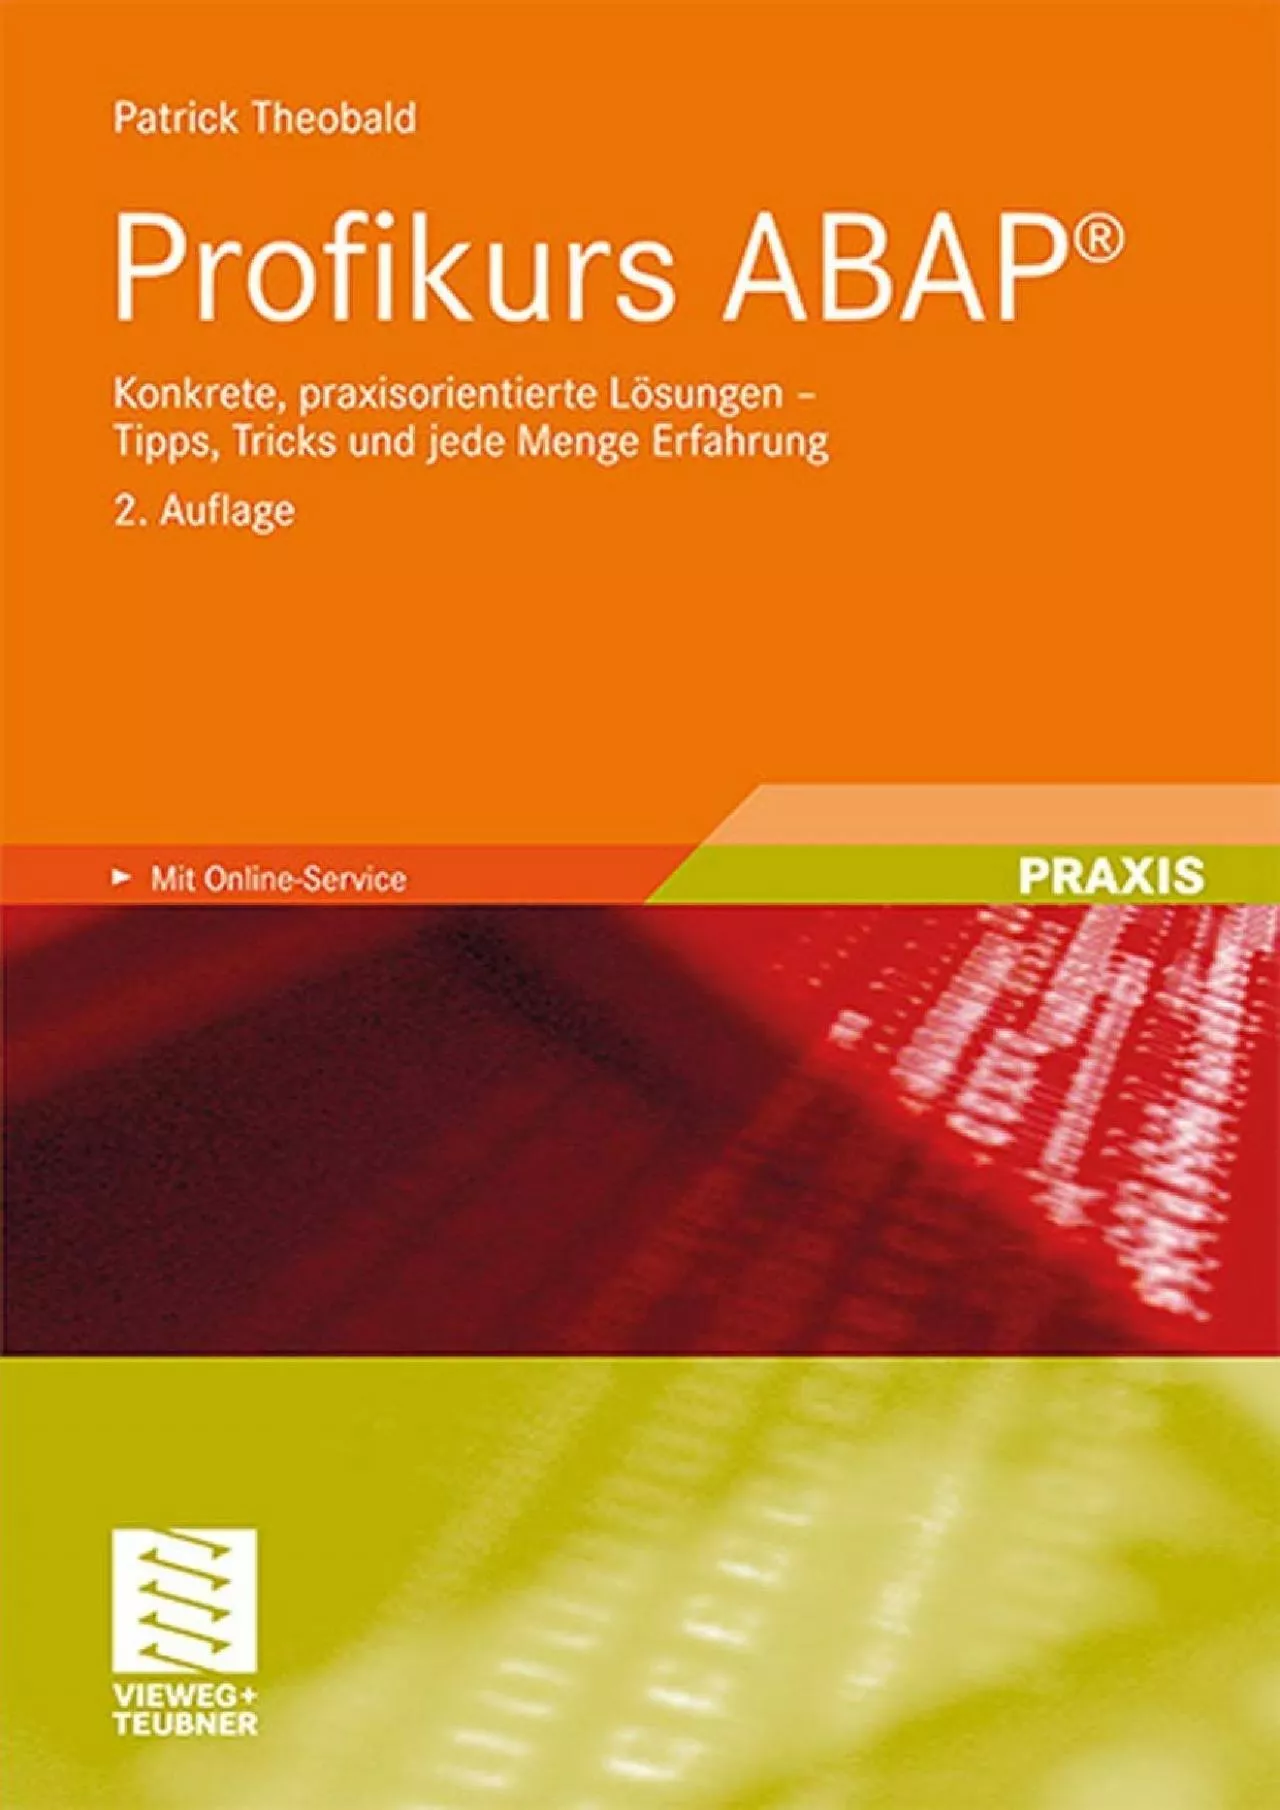 [READING BOOK]-Profikurs ABAP®: Konkrete, praxisorientierte Lösungen - Tipps, Tricks